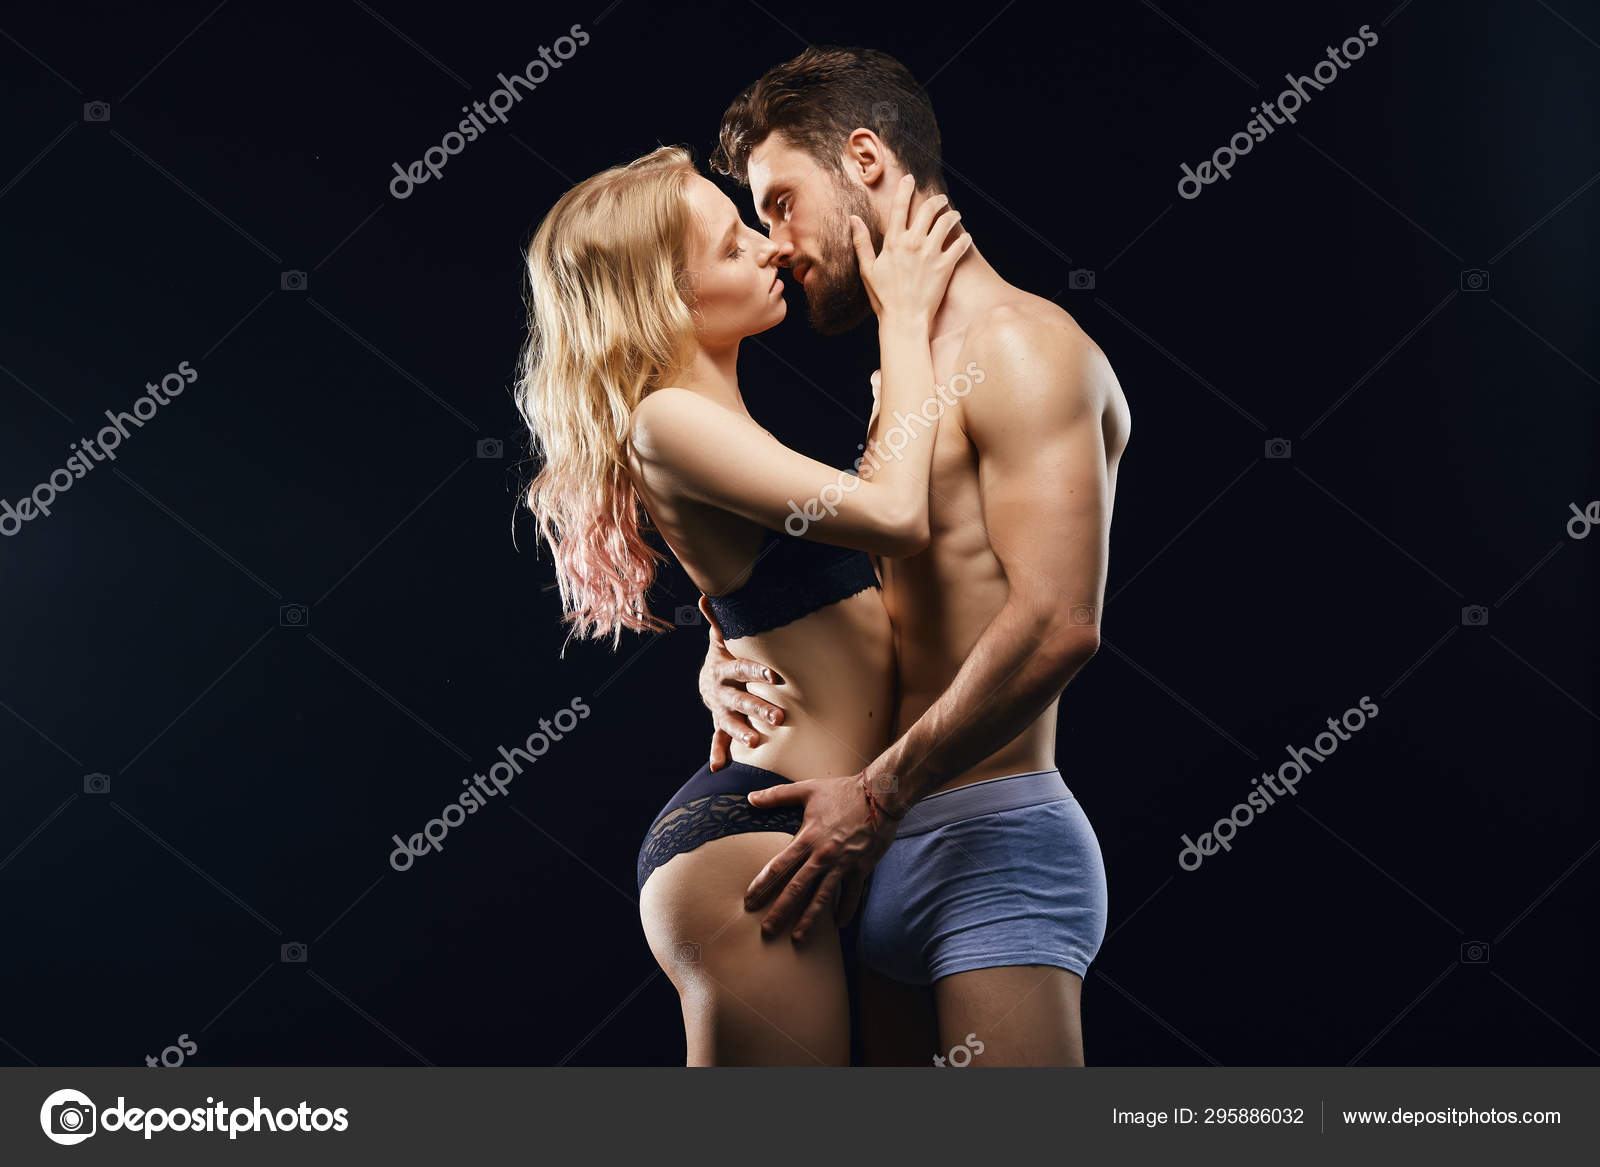 Photos Of People Having Sex